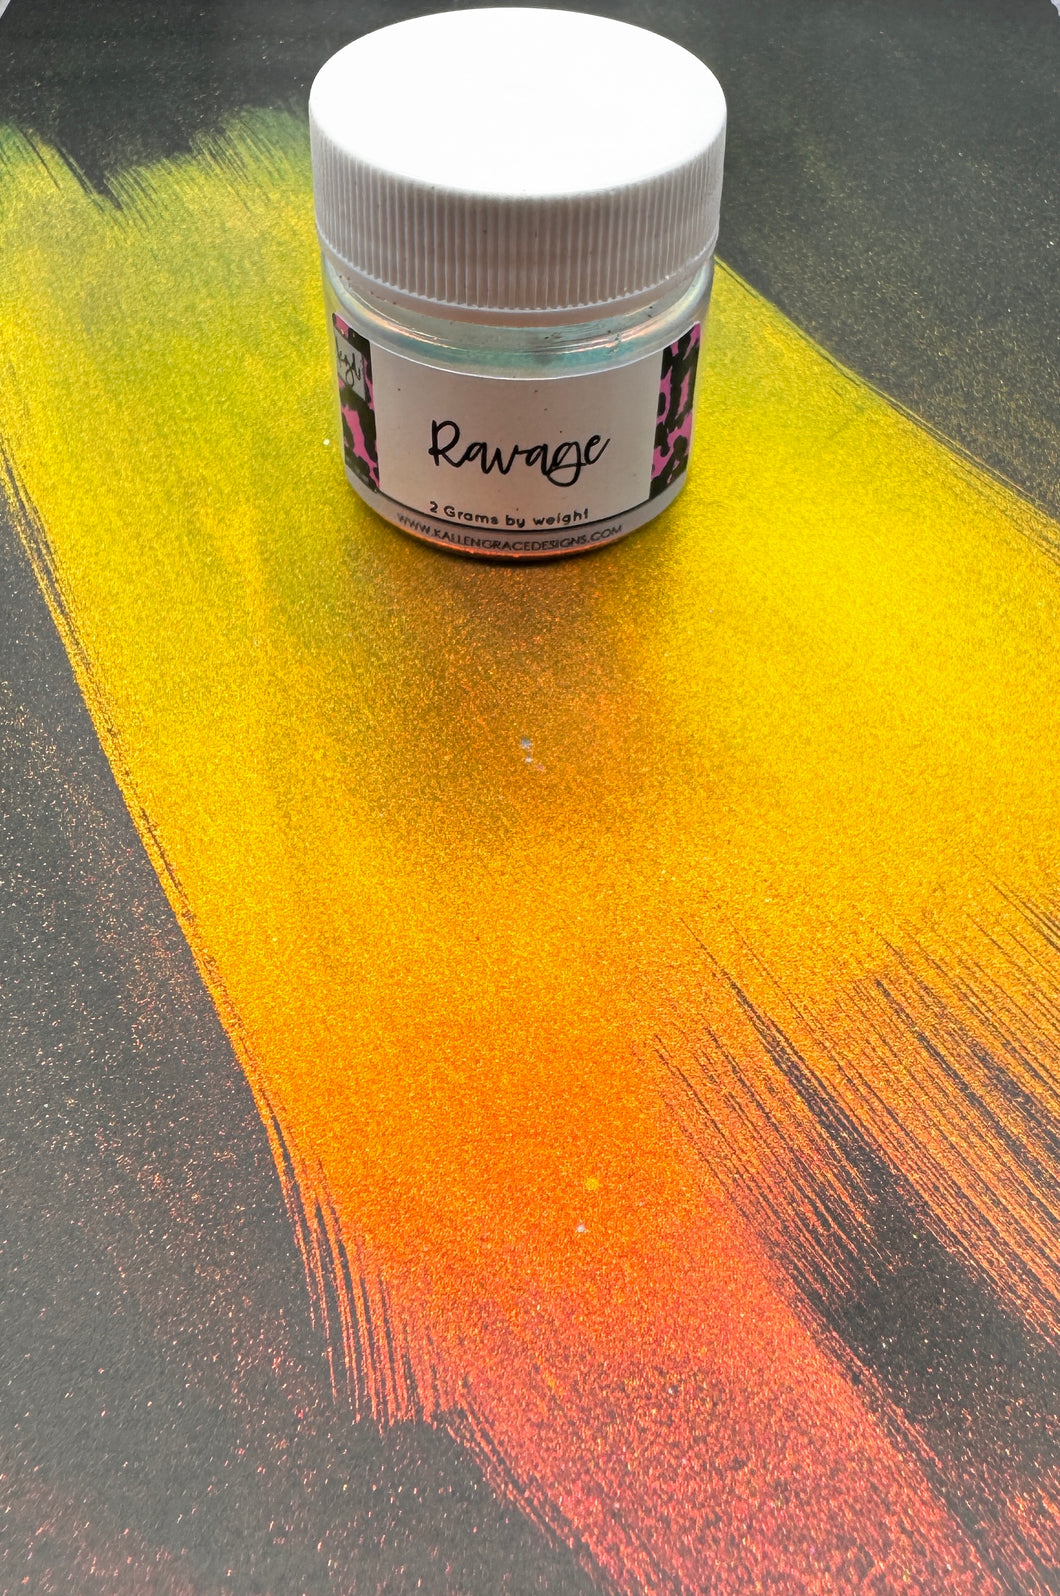 Ravage // 2g Aurora Pigment